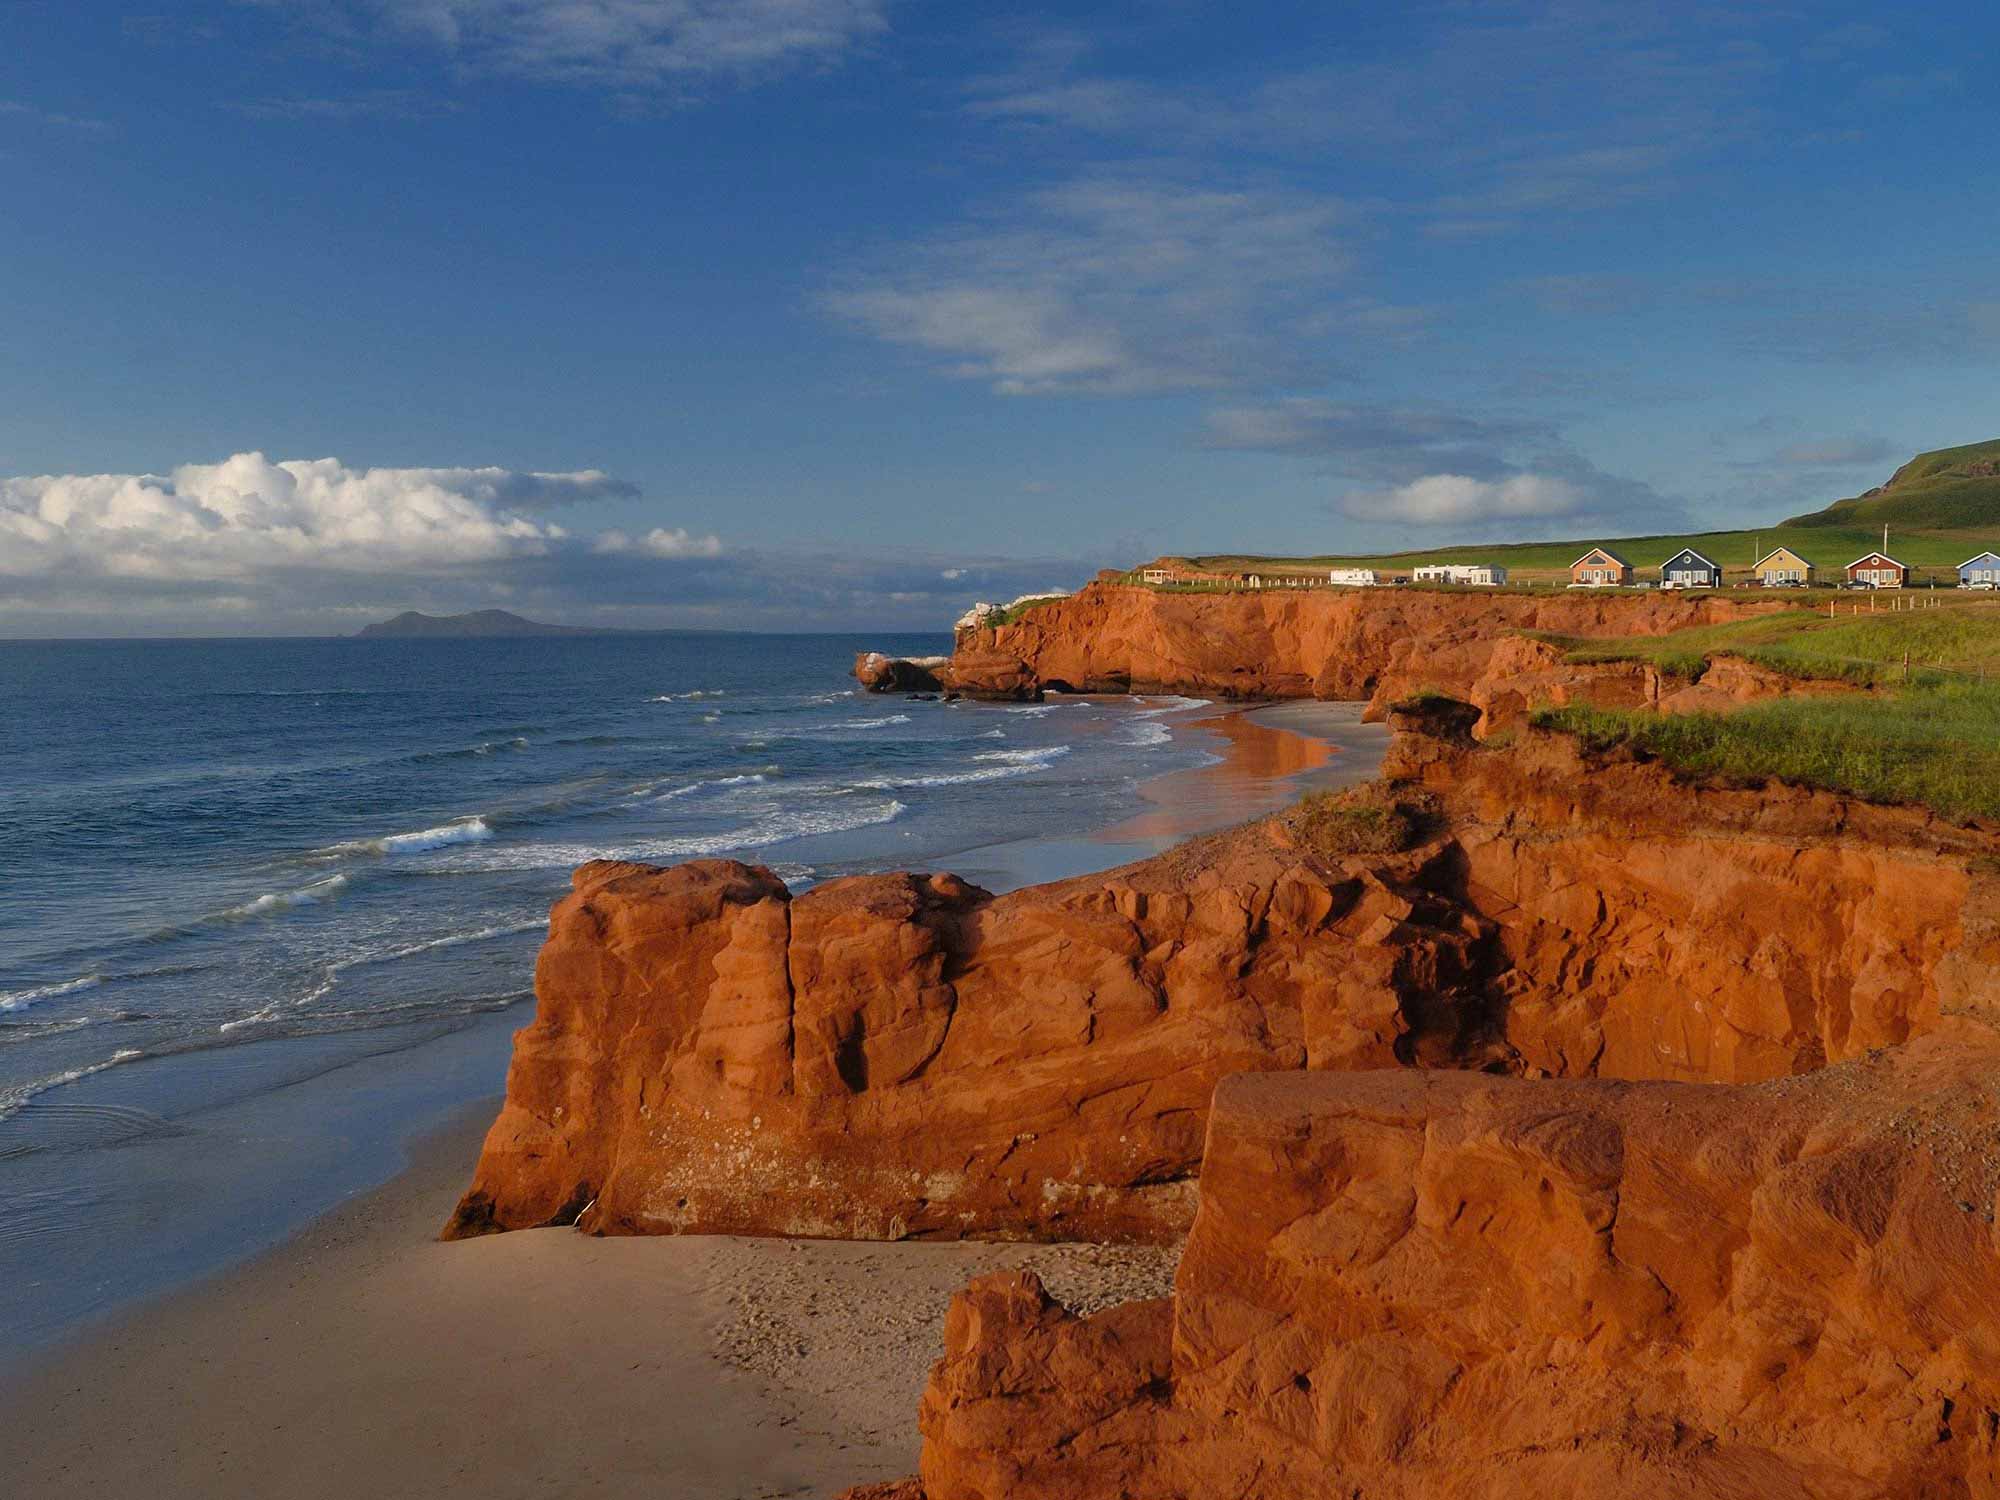 Prince Edward Island's iconic red sandstone cliffs